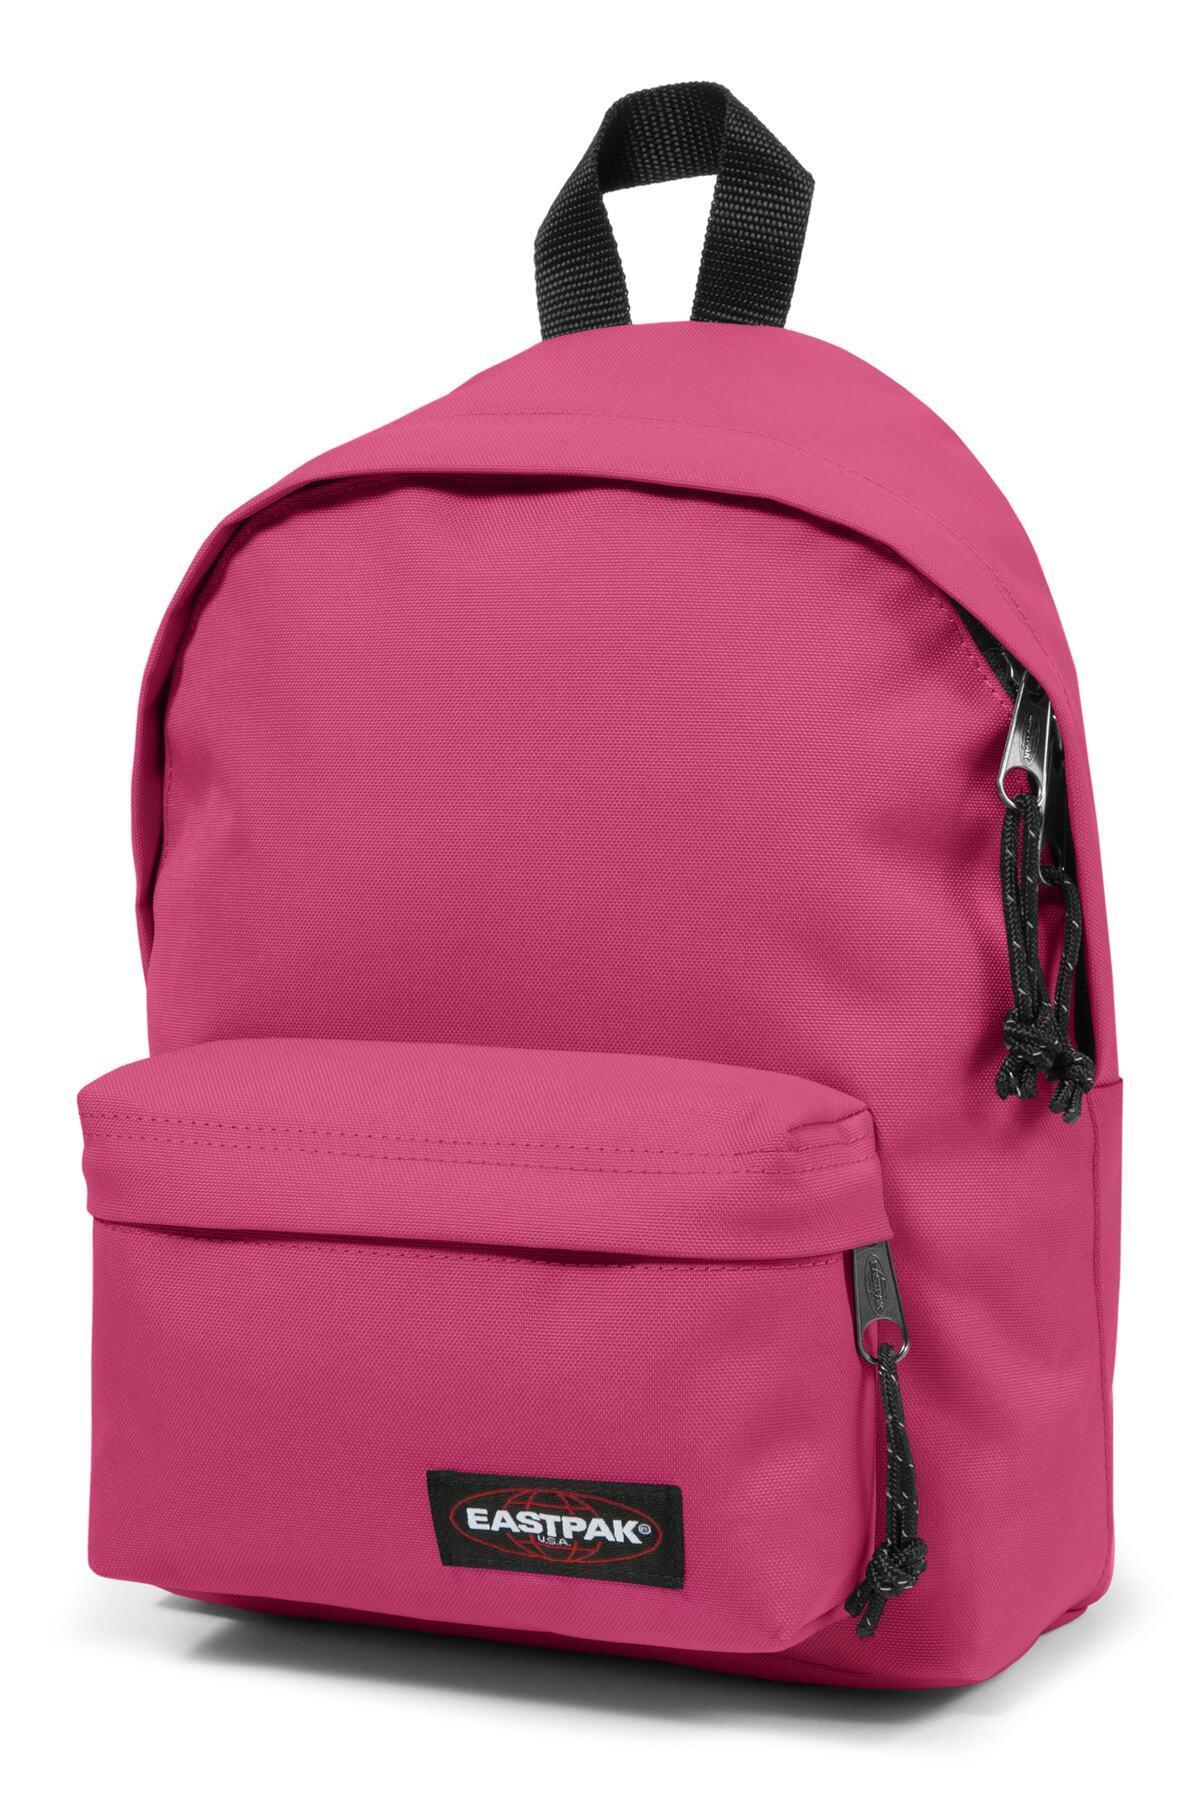 Eastpak Eastpack Orbit Canvas Backpack in Pink - Lyst